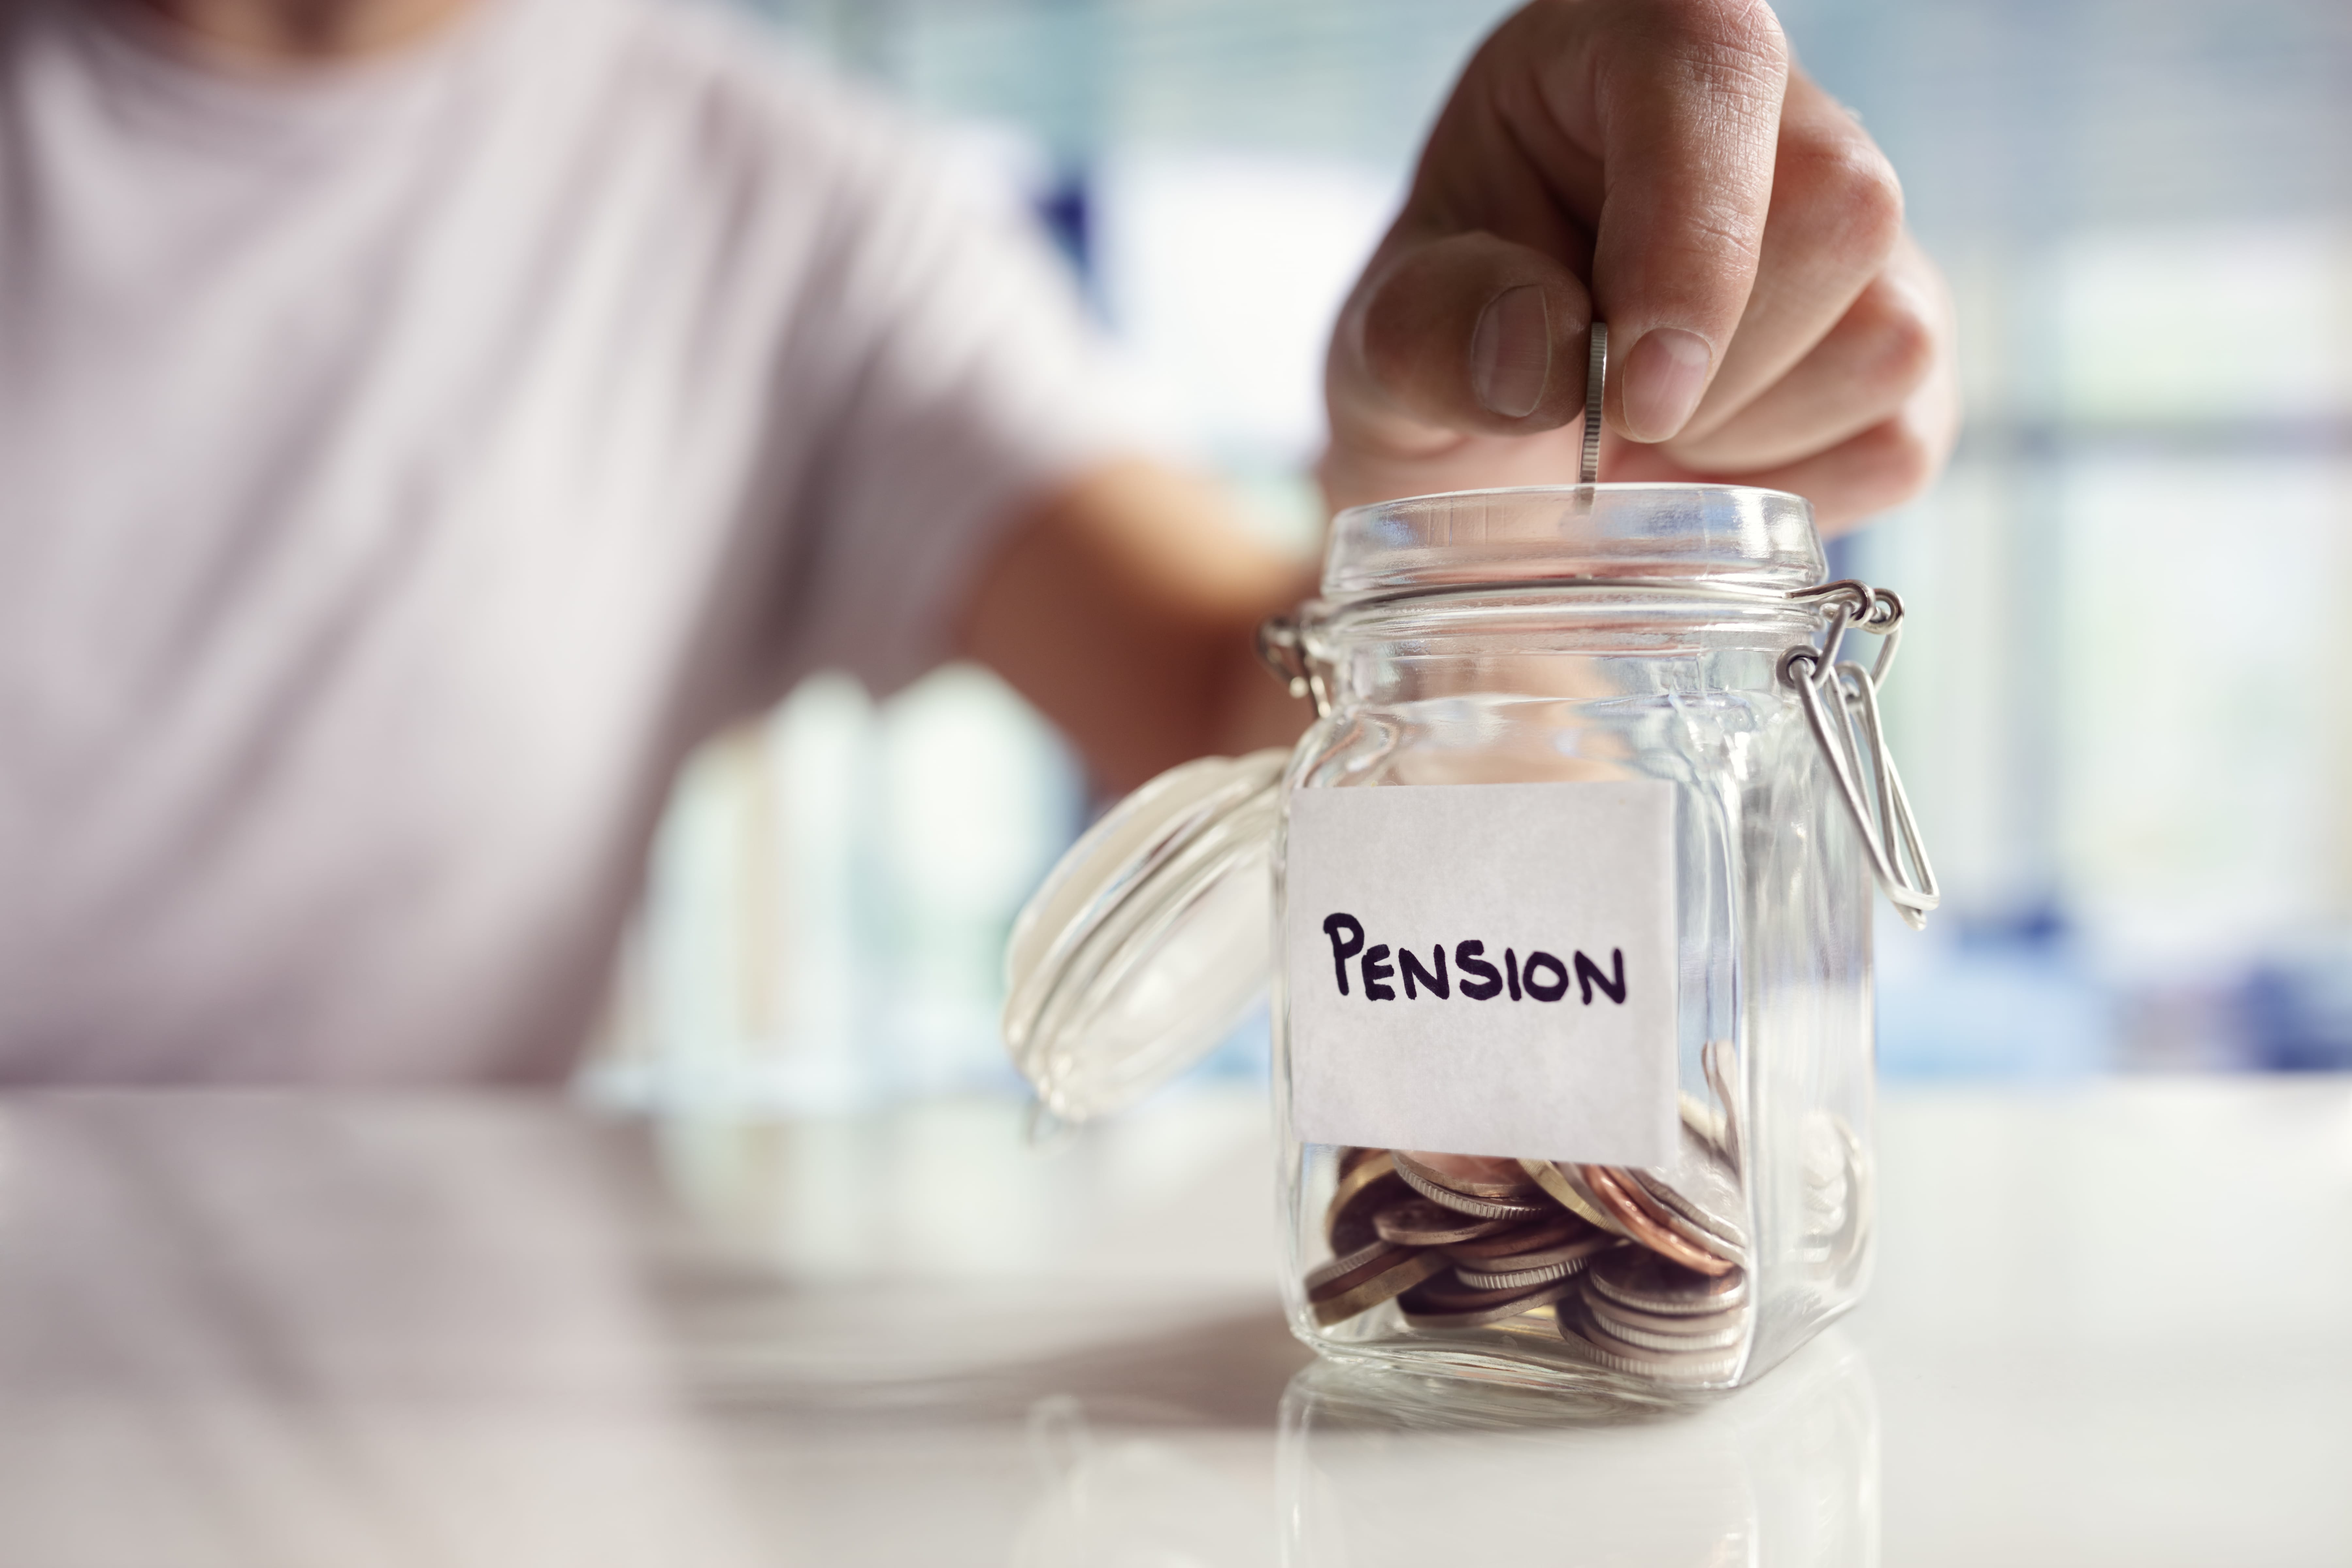 A man inserts a quarter into a mason jar labeled "Pension"